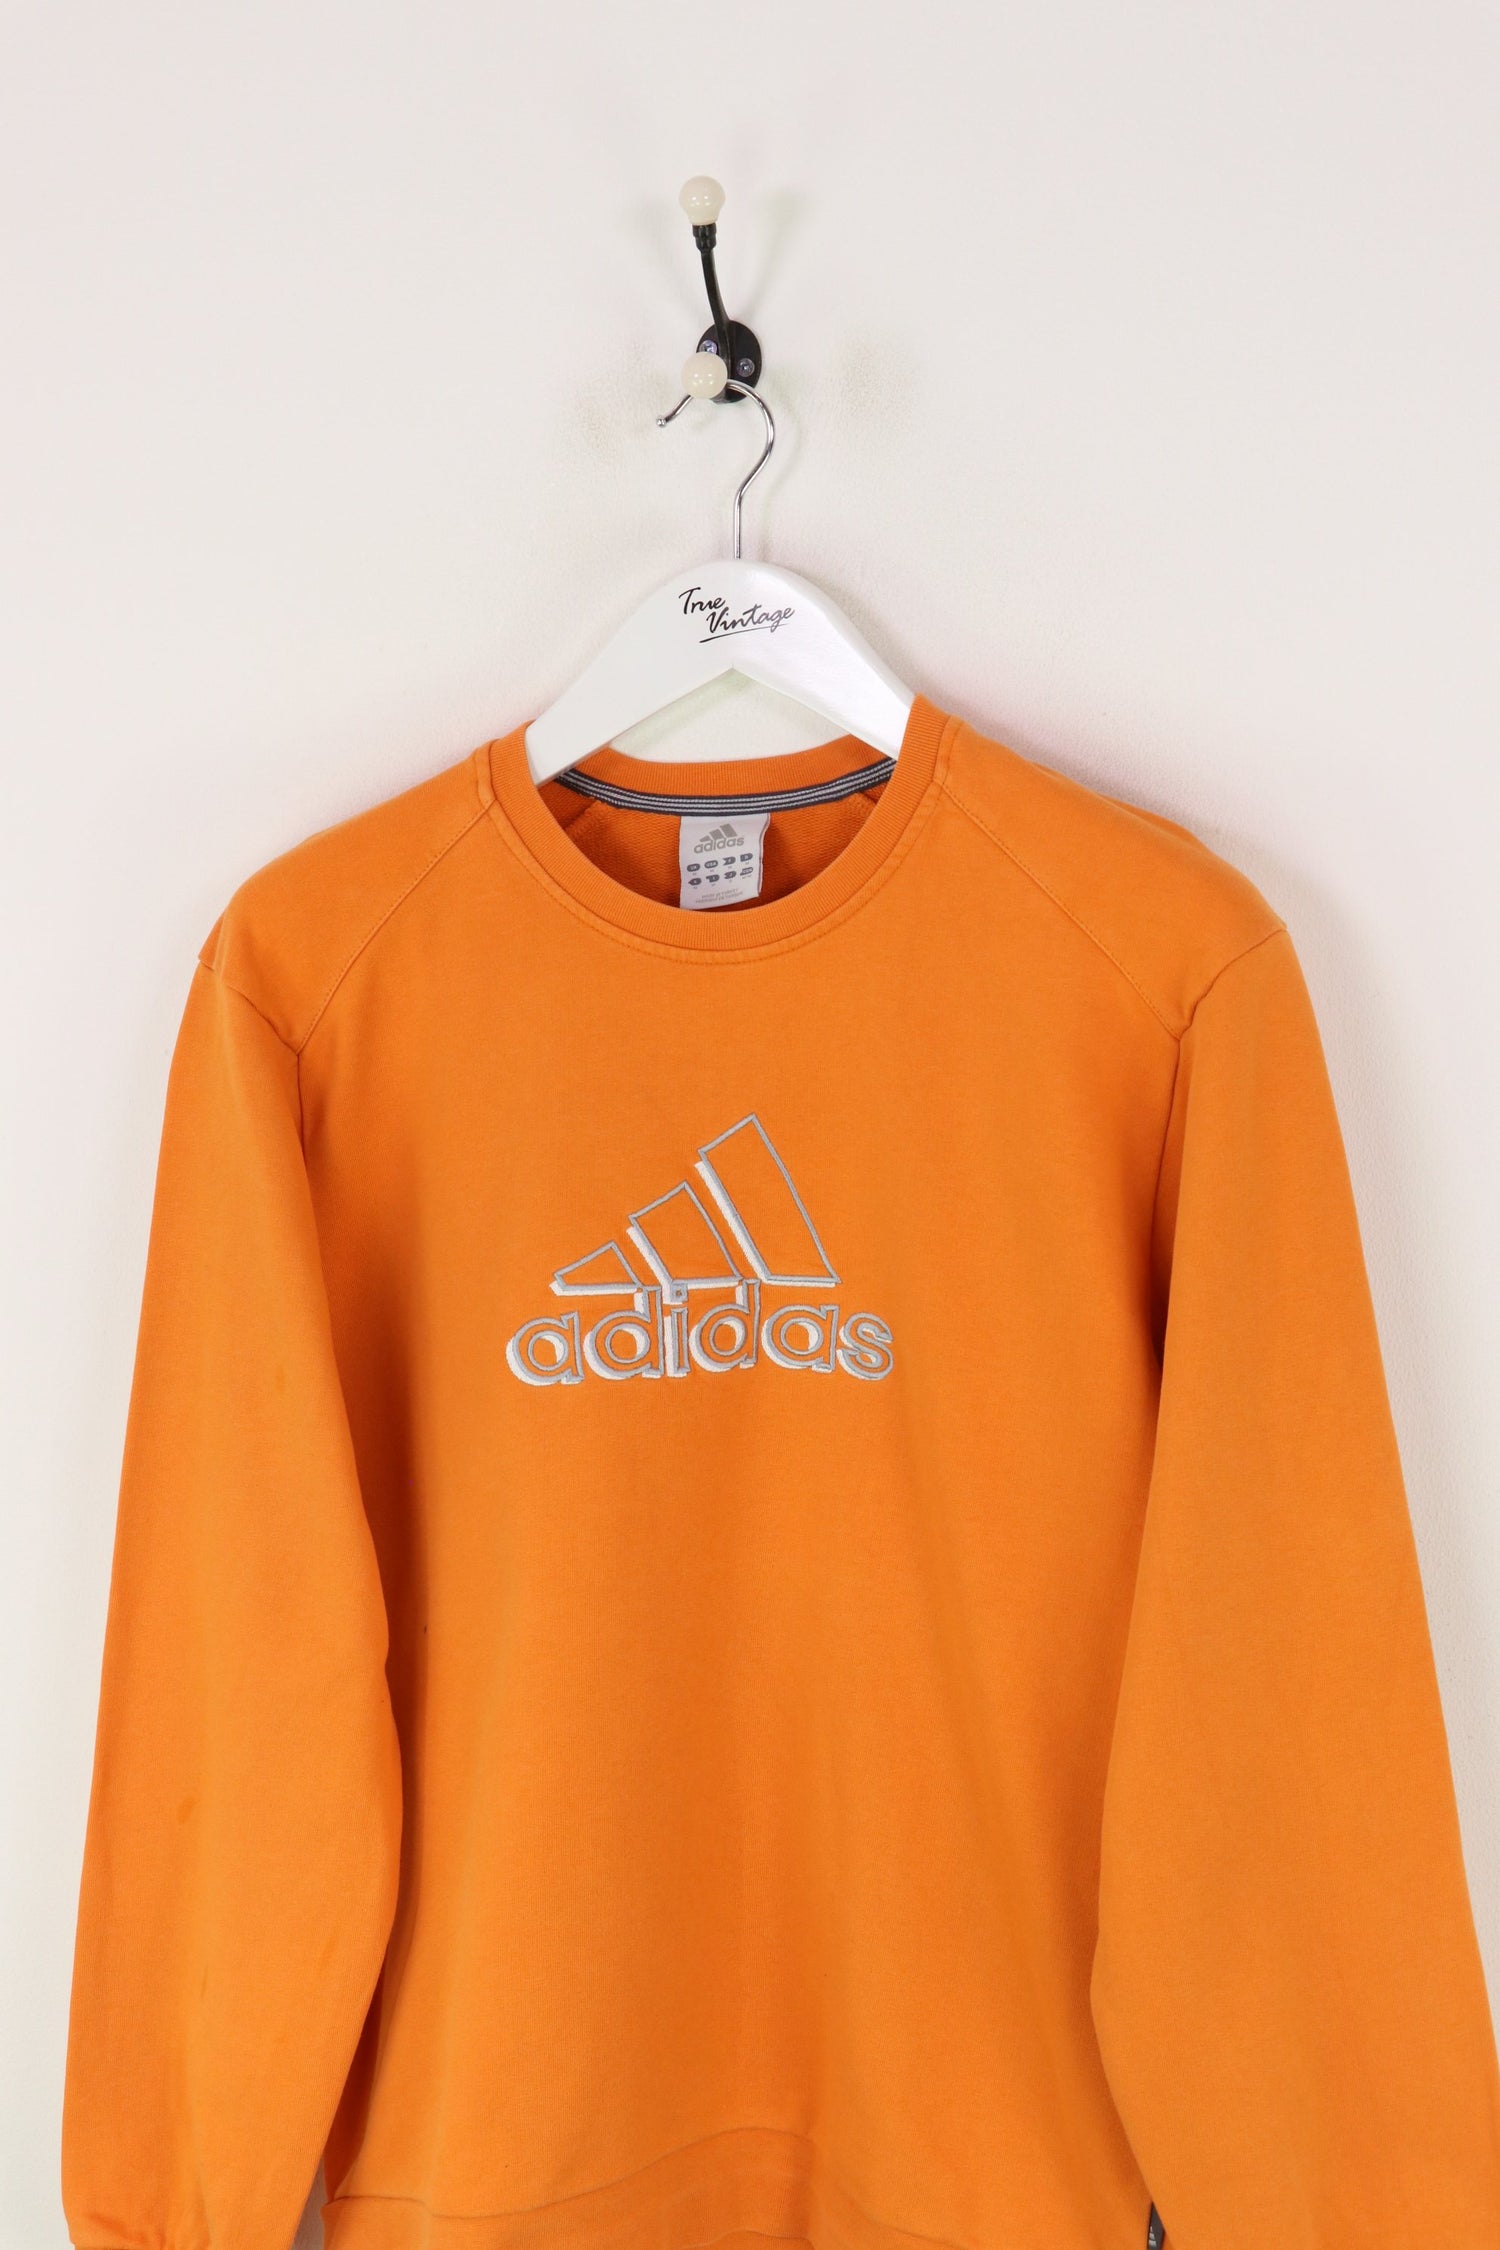 Adidas Sweatshirt Orange Medium